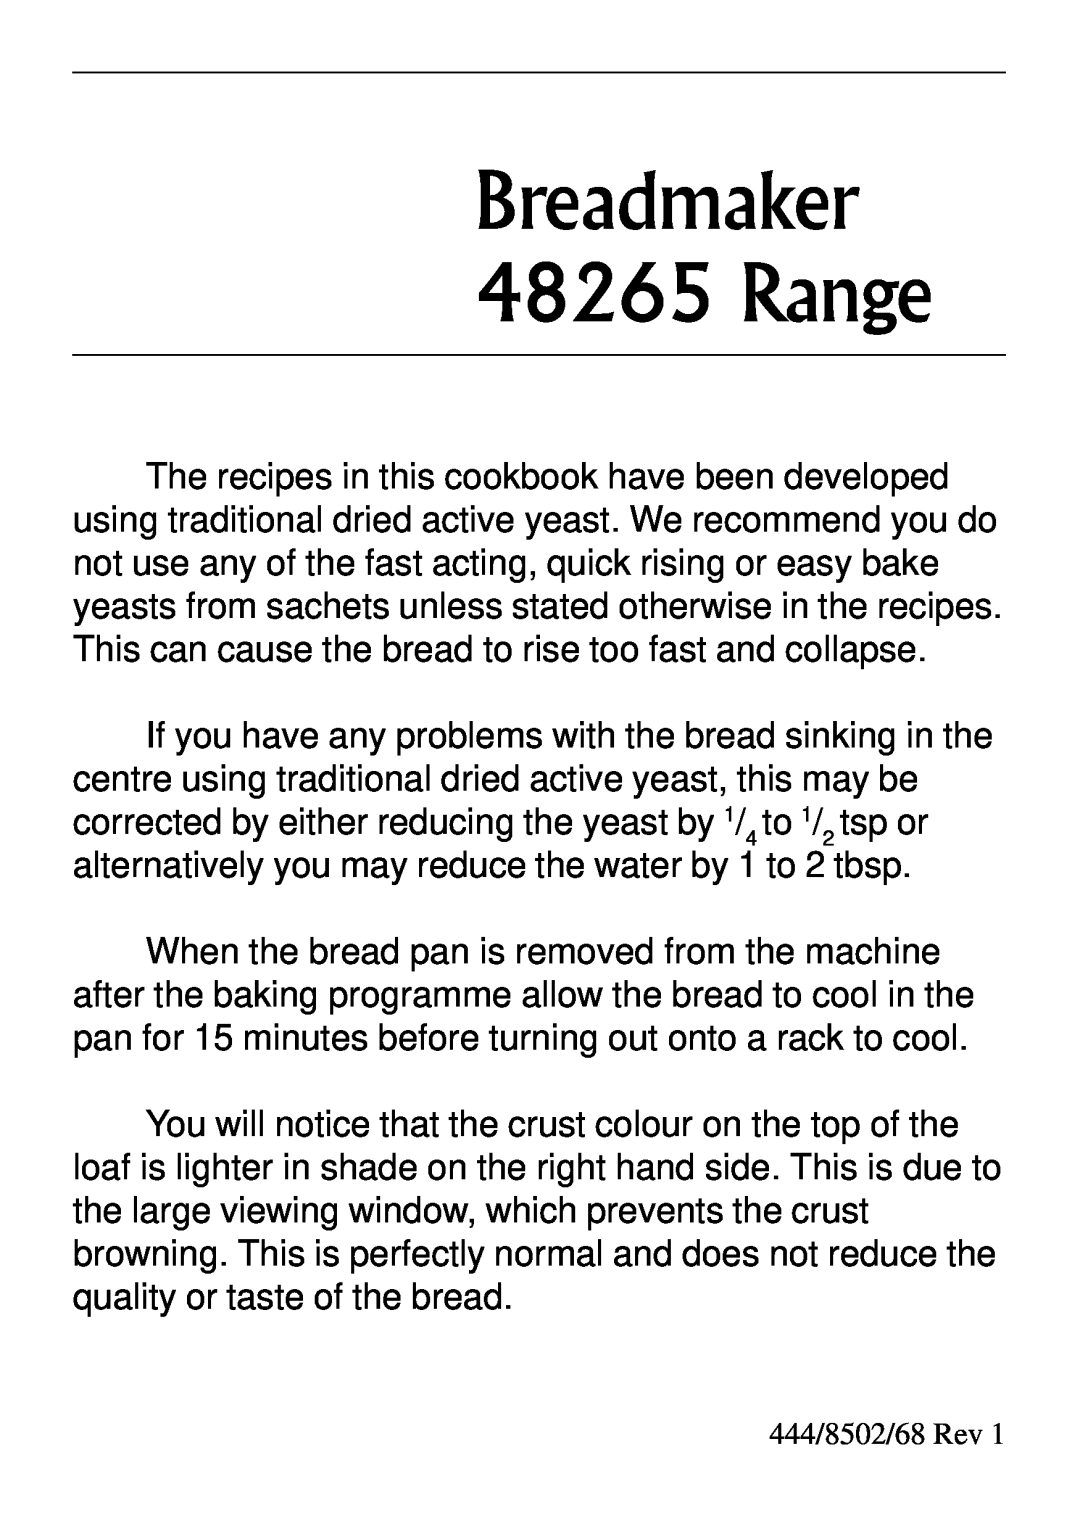 Morphy Richards Bread Maker manual Breadmaker 48265 Range, 444/8502/68 Rev 